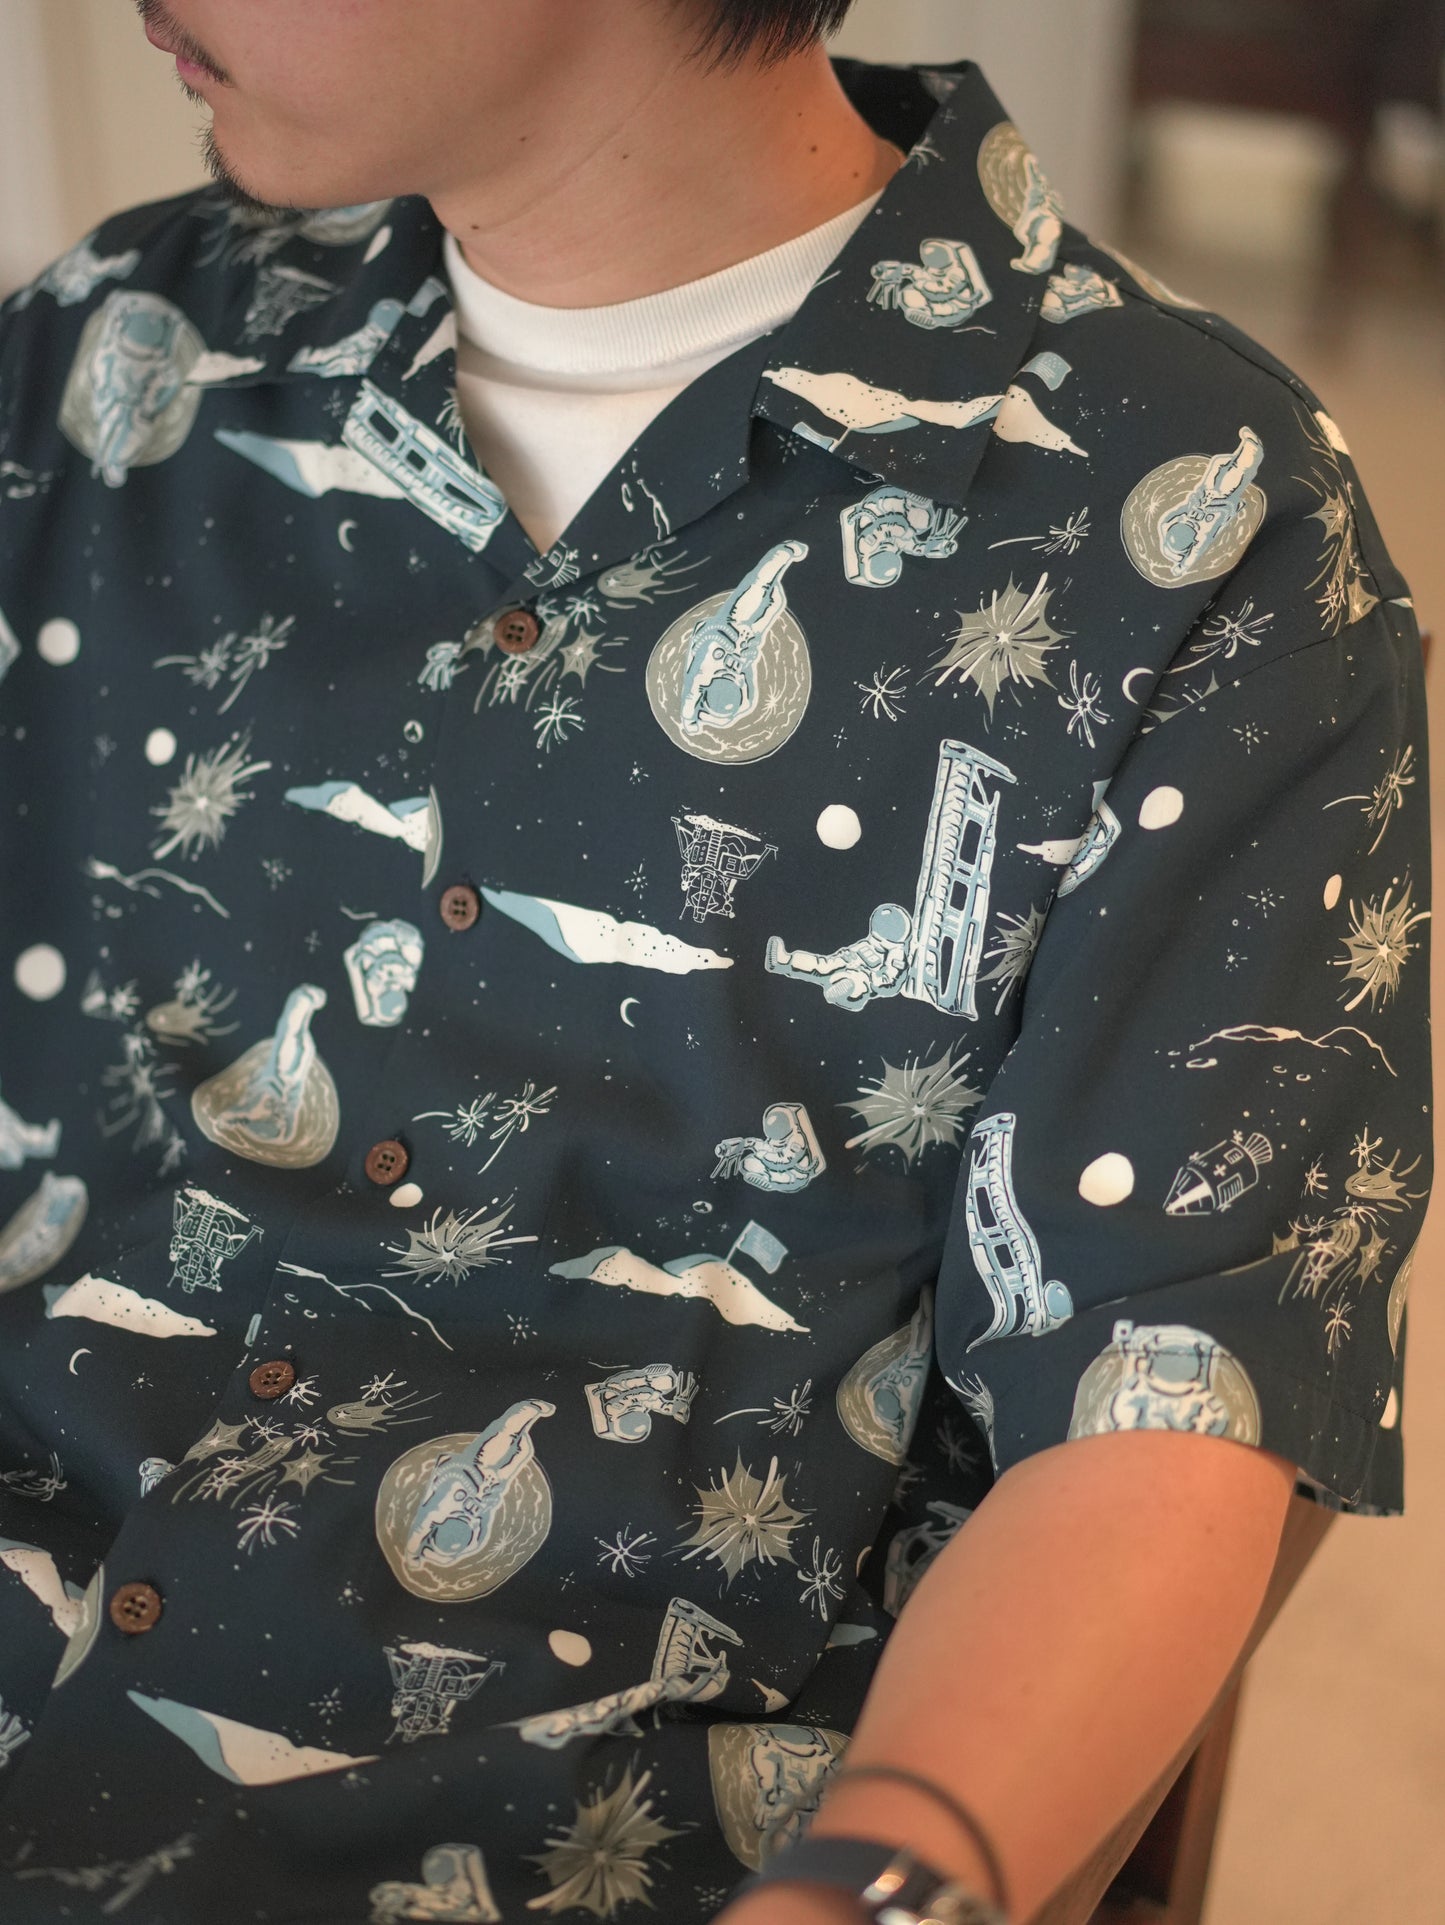 Space Aloha Shirt - NAVY